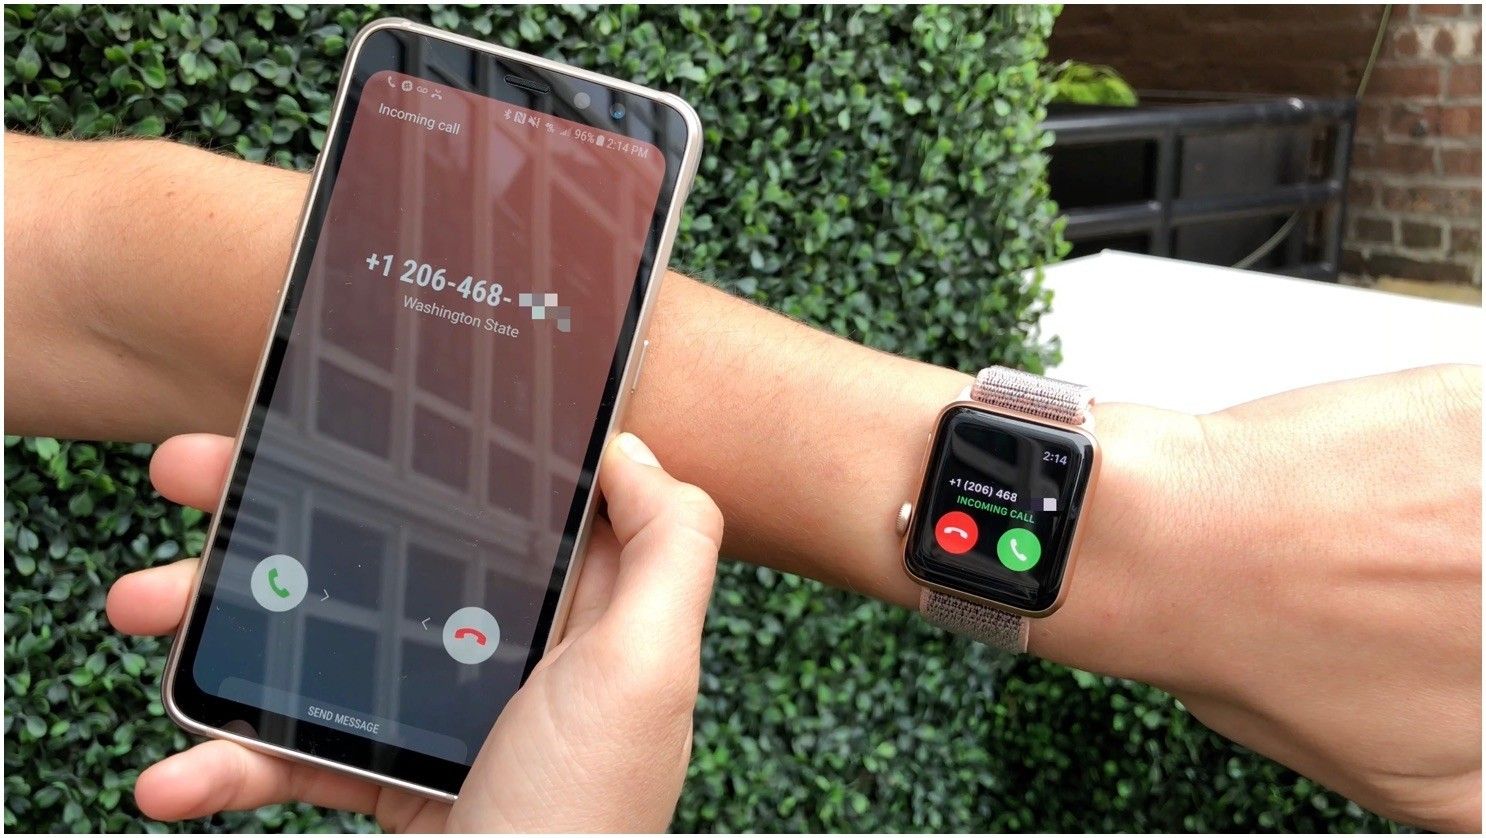 Watch подключить к андроид можно. Эппл вотч на андроид. Эппл вотч 4 андроид. Samsung Galaxy Apple watch. Часы эпл вотч на андроид.